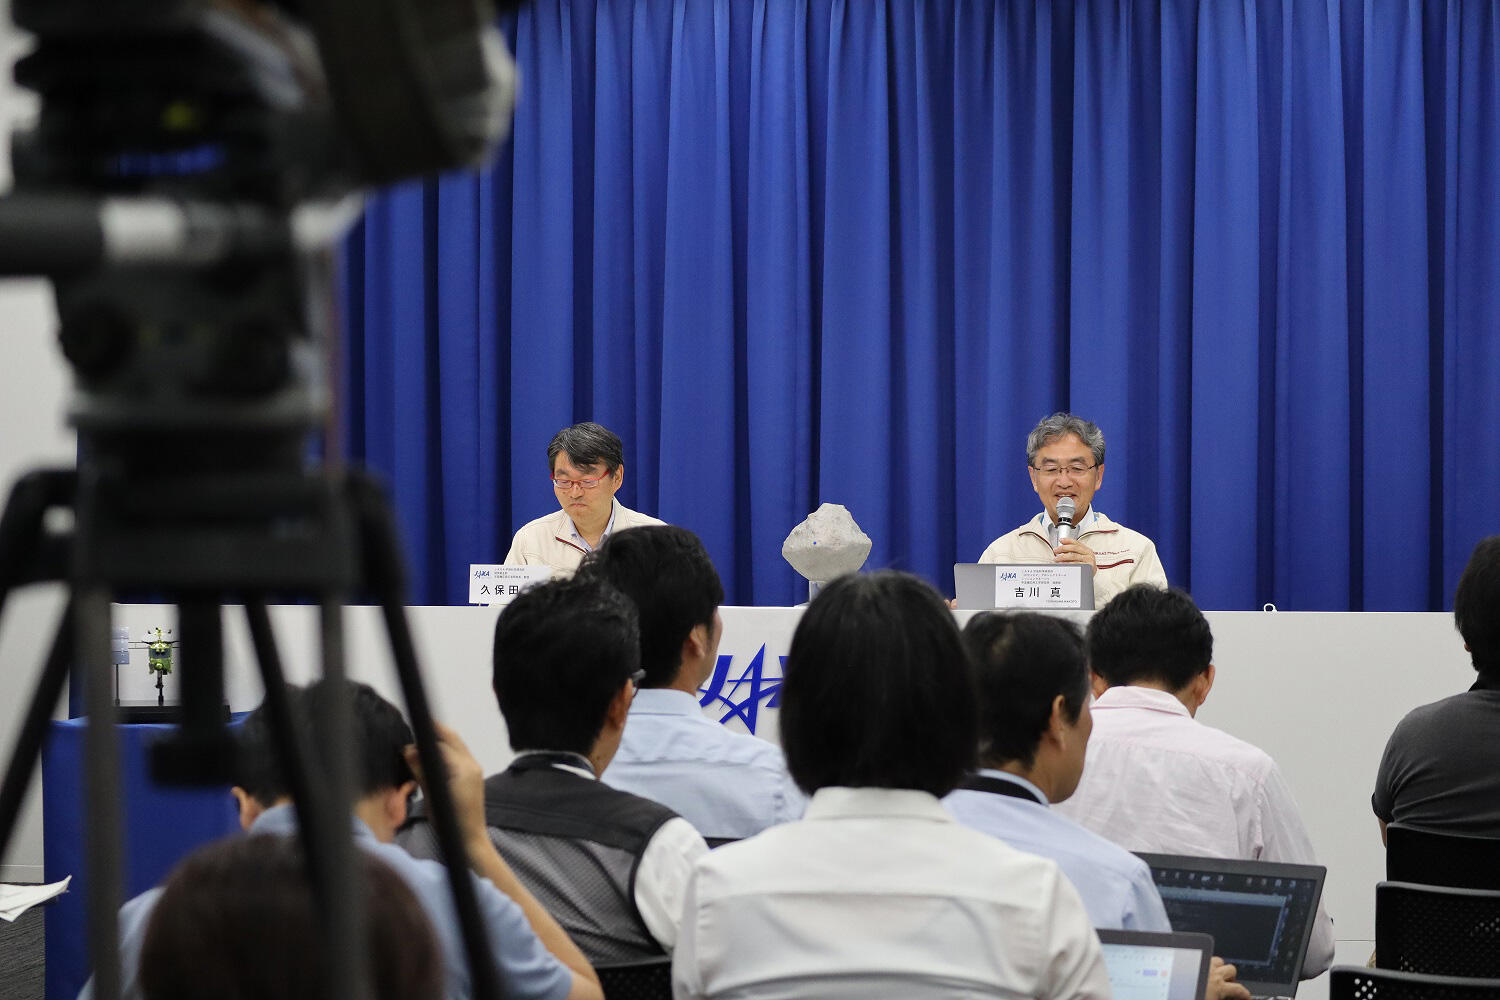 Kubota (left) and Yoshikawa (right) during the press briefing.